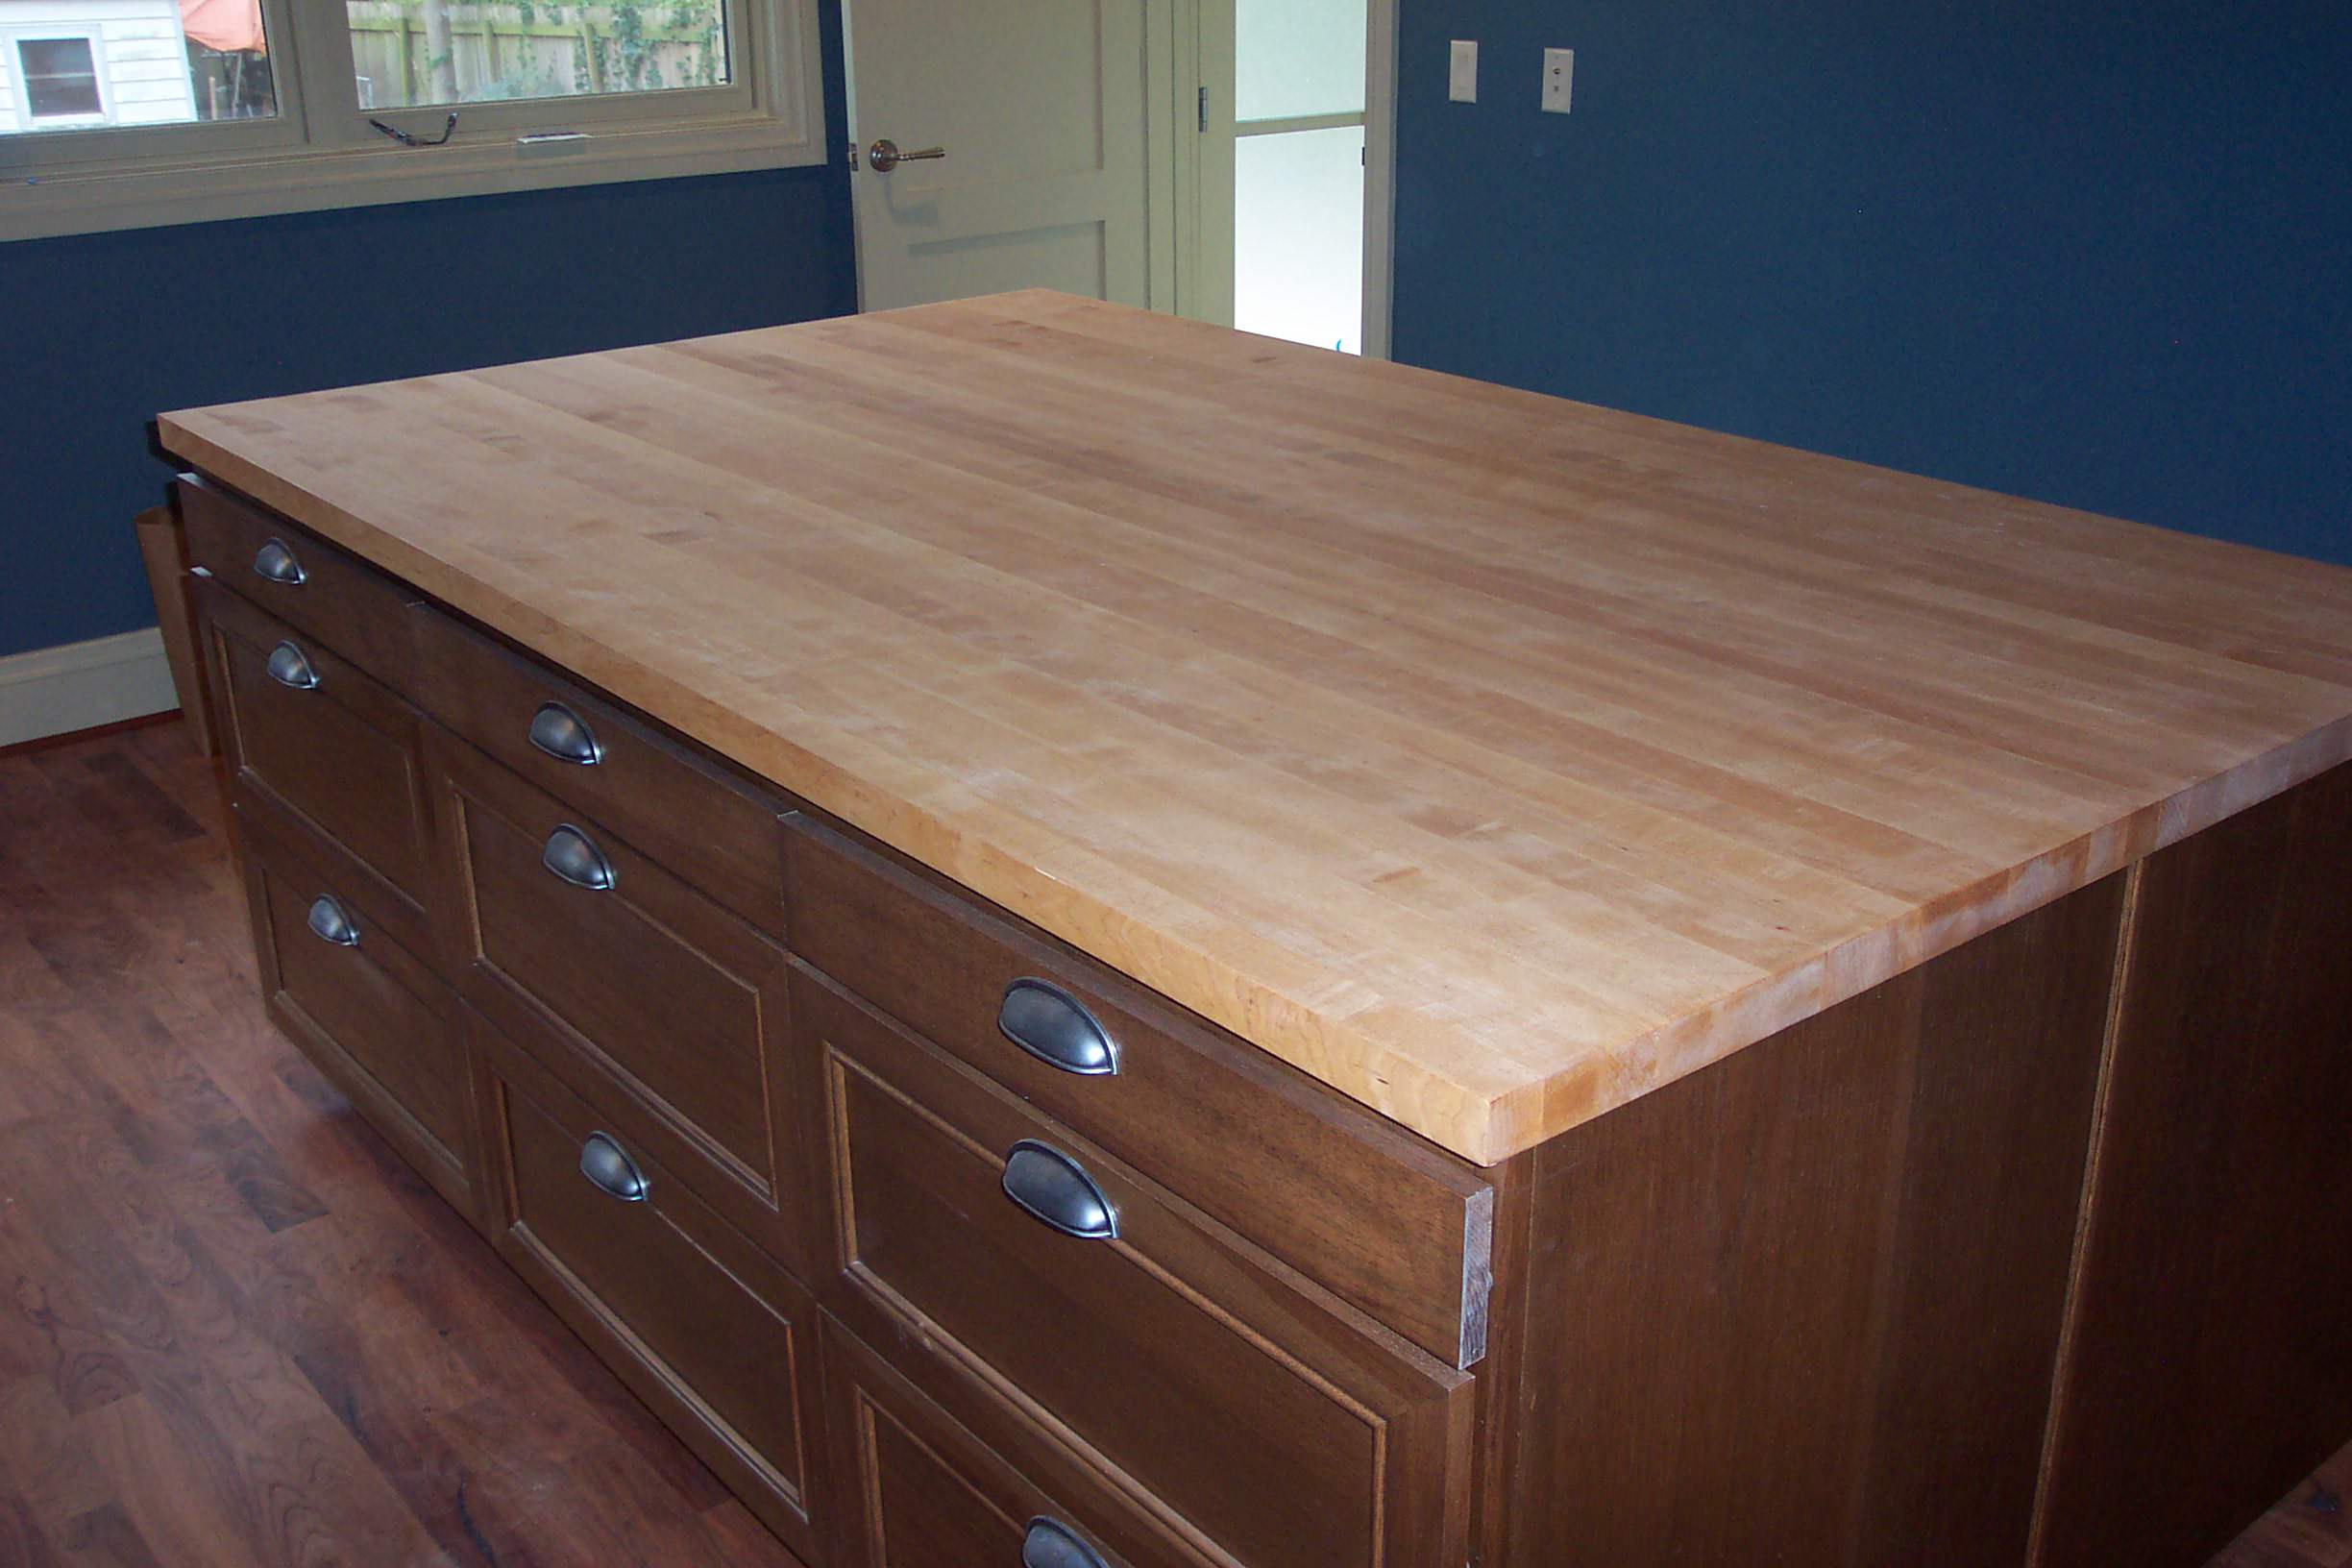 Maple Edge grain wood counter top